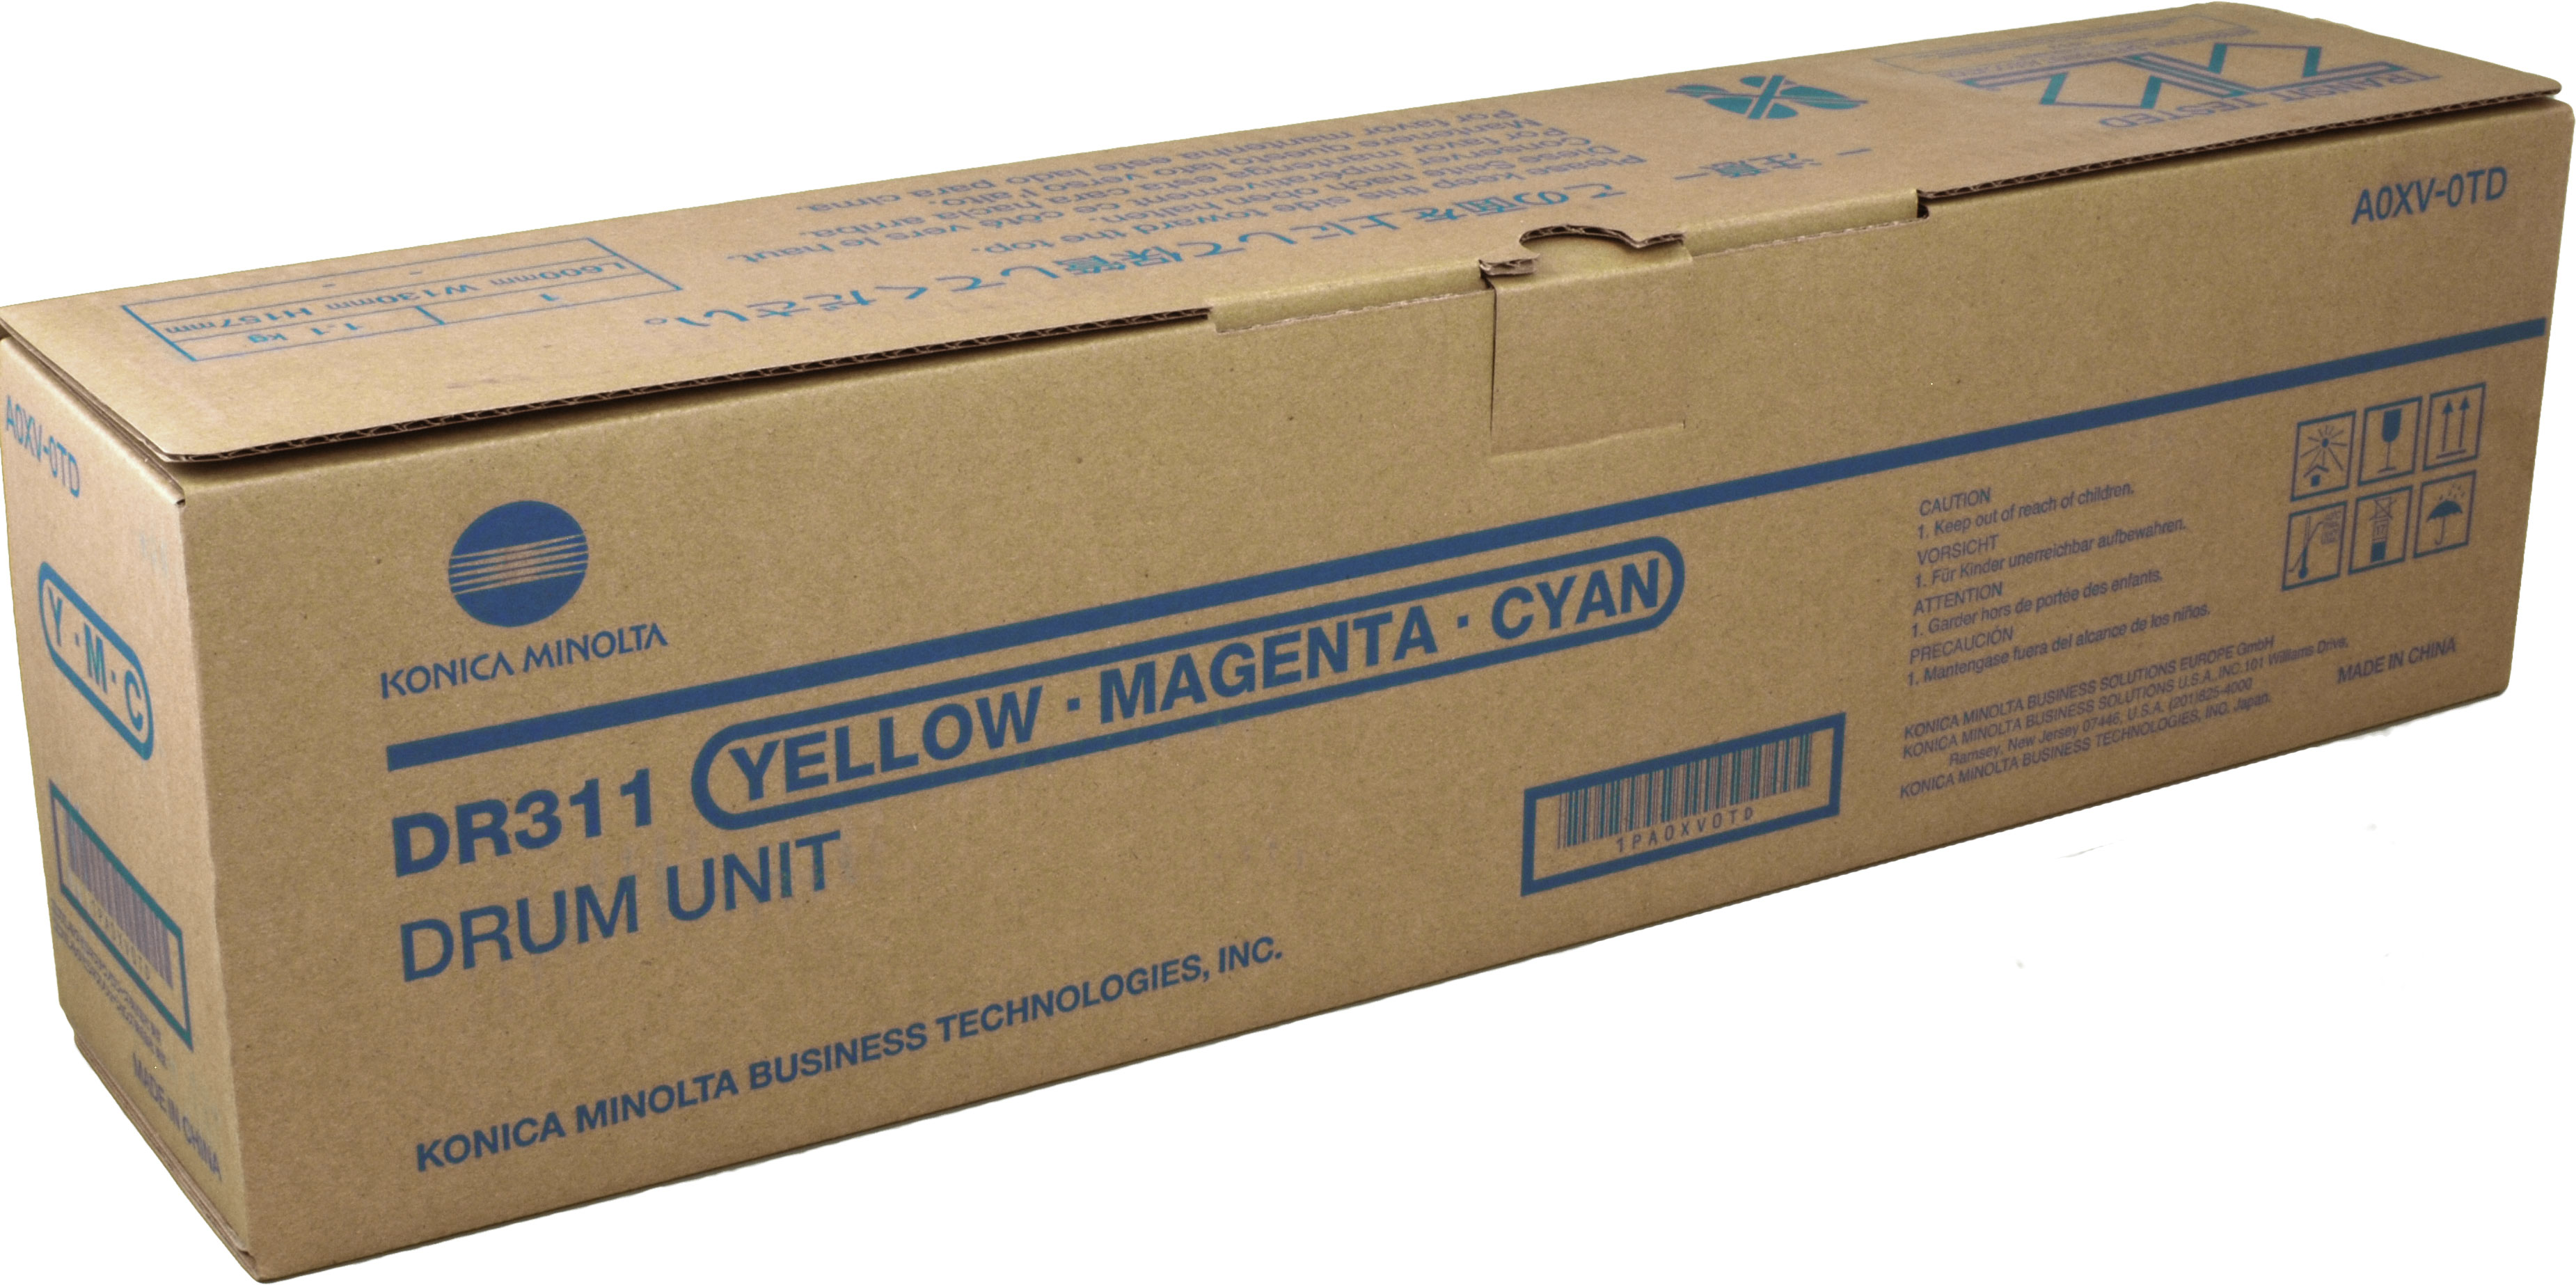 KONICA MINOLTA DR-311C Trommel yellow cyan, (A0XV0TD) magenta